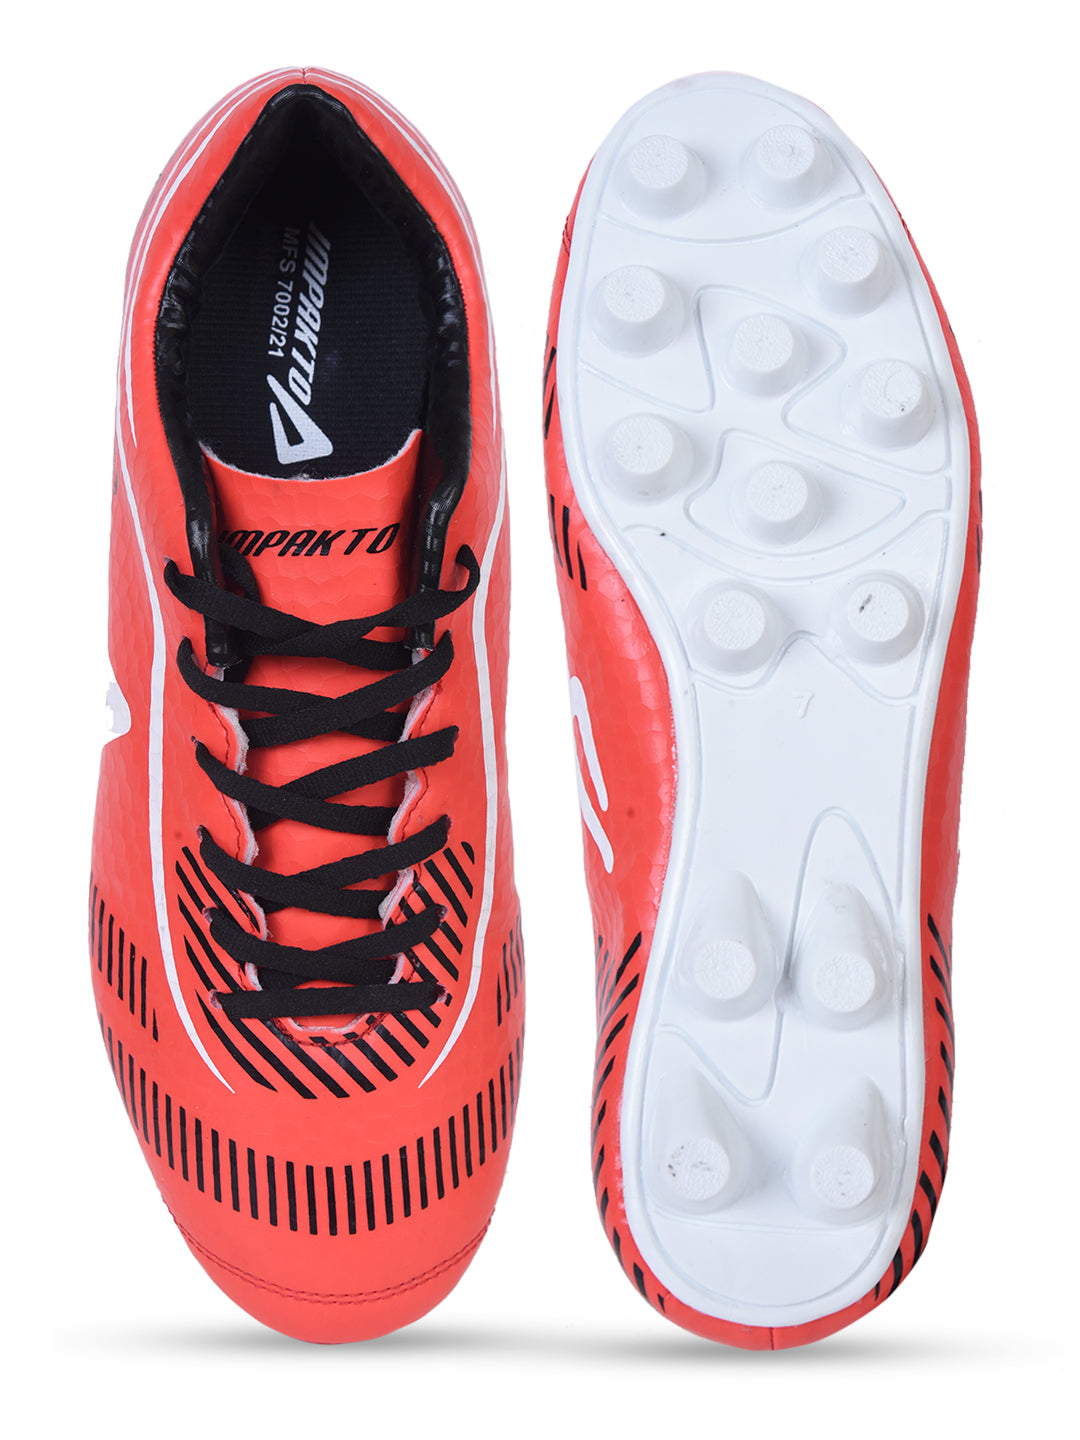 Impakto Spike Men's Red Football Shoes